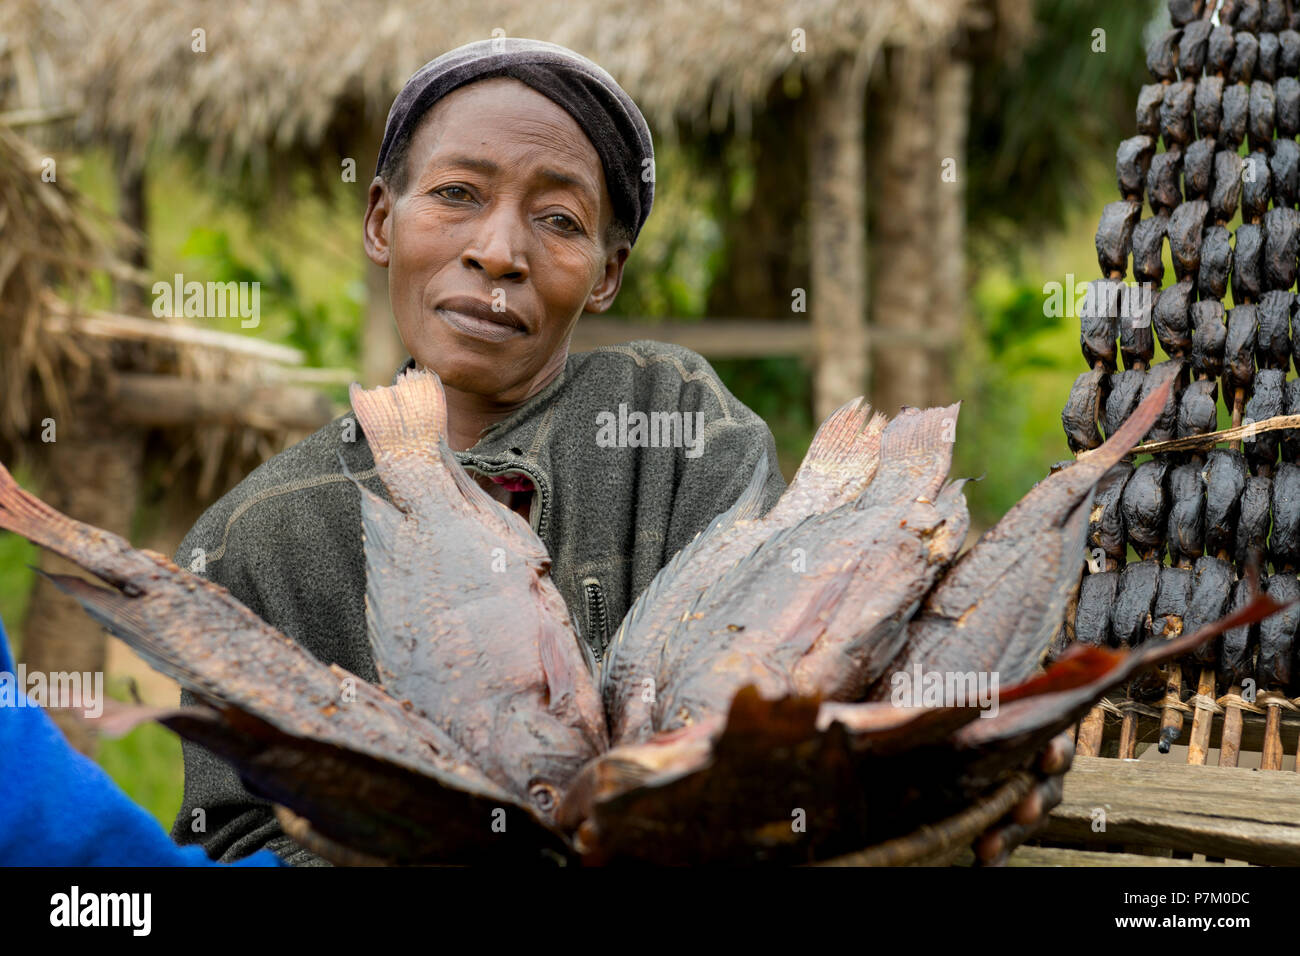 Woman Selling Fish, Smoked Tilapia (Ngege), Roadside Fish seller, Street Vendor, Vendors Uganda Stock Photo